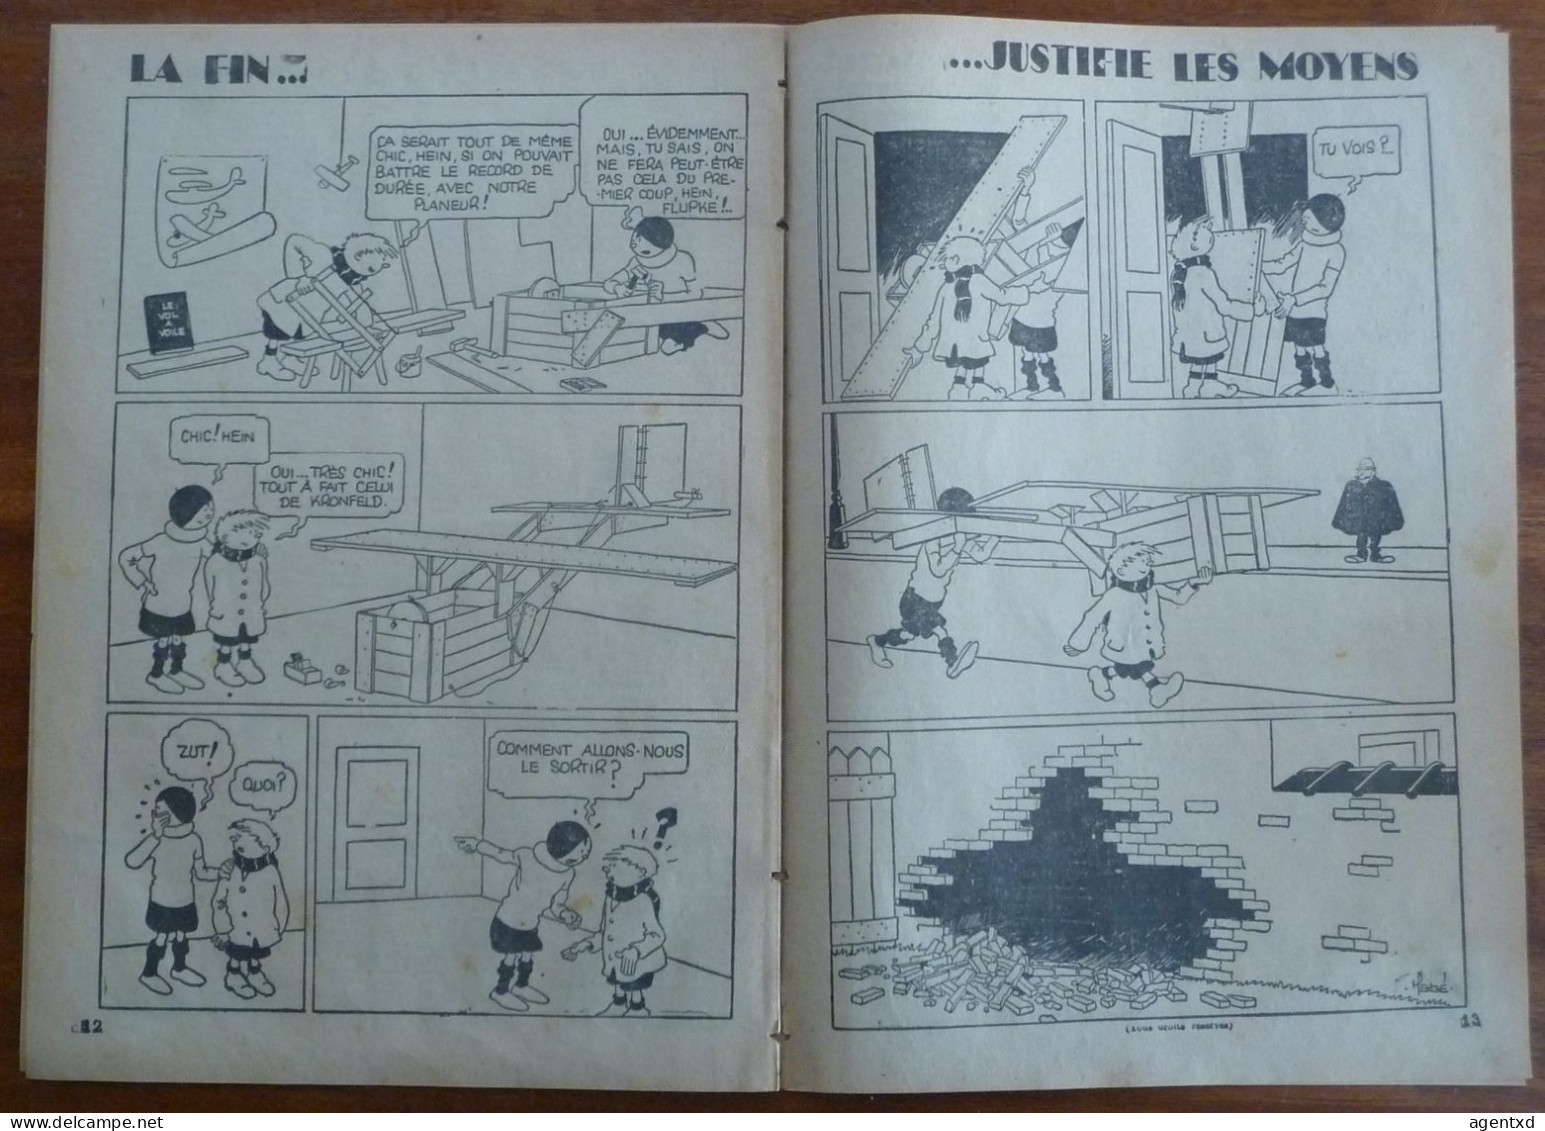 TINTIN – PETIT VINGTIEME – N°48 Du 30 NOVEMBRE 1933 - Tintin